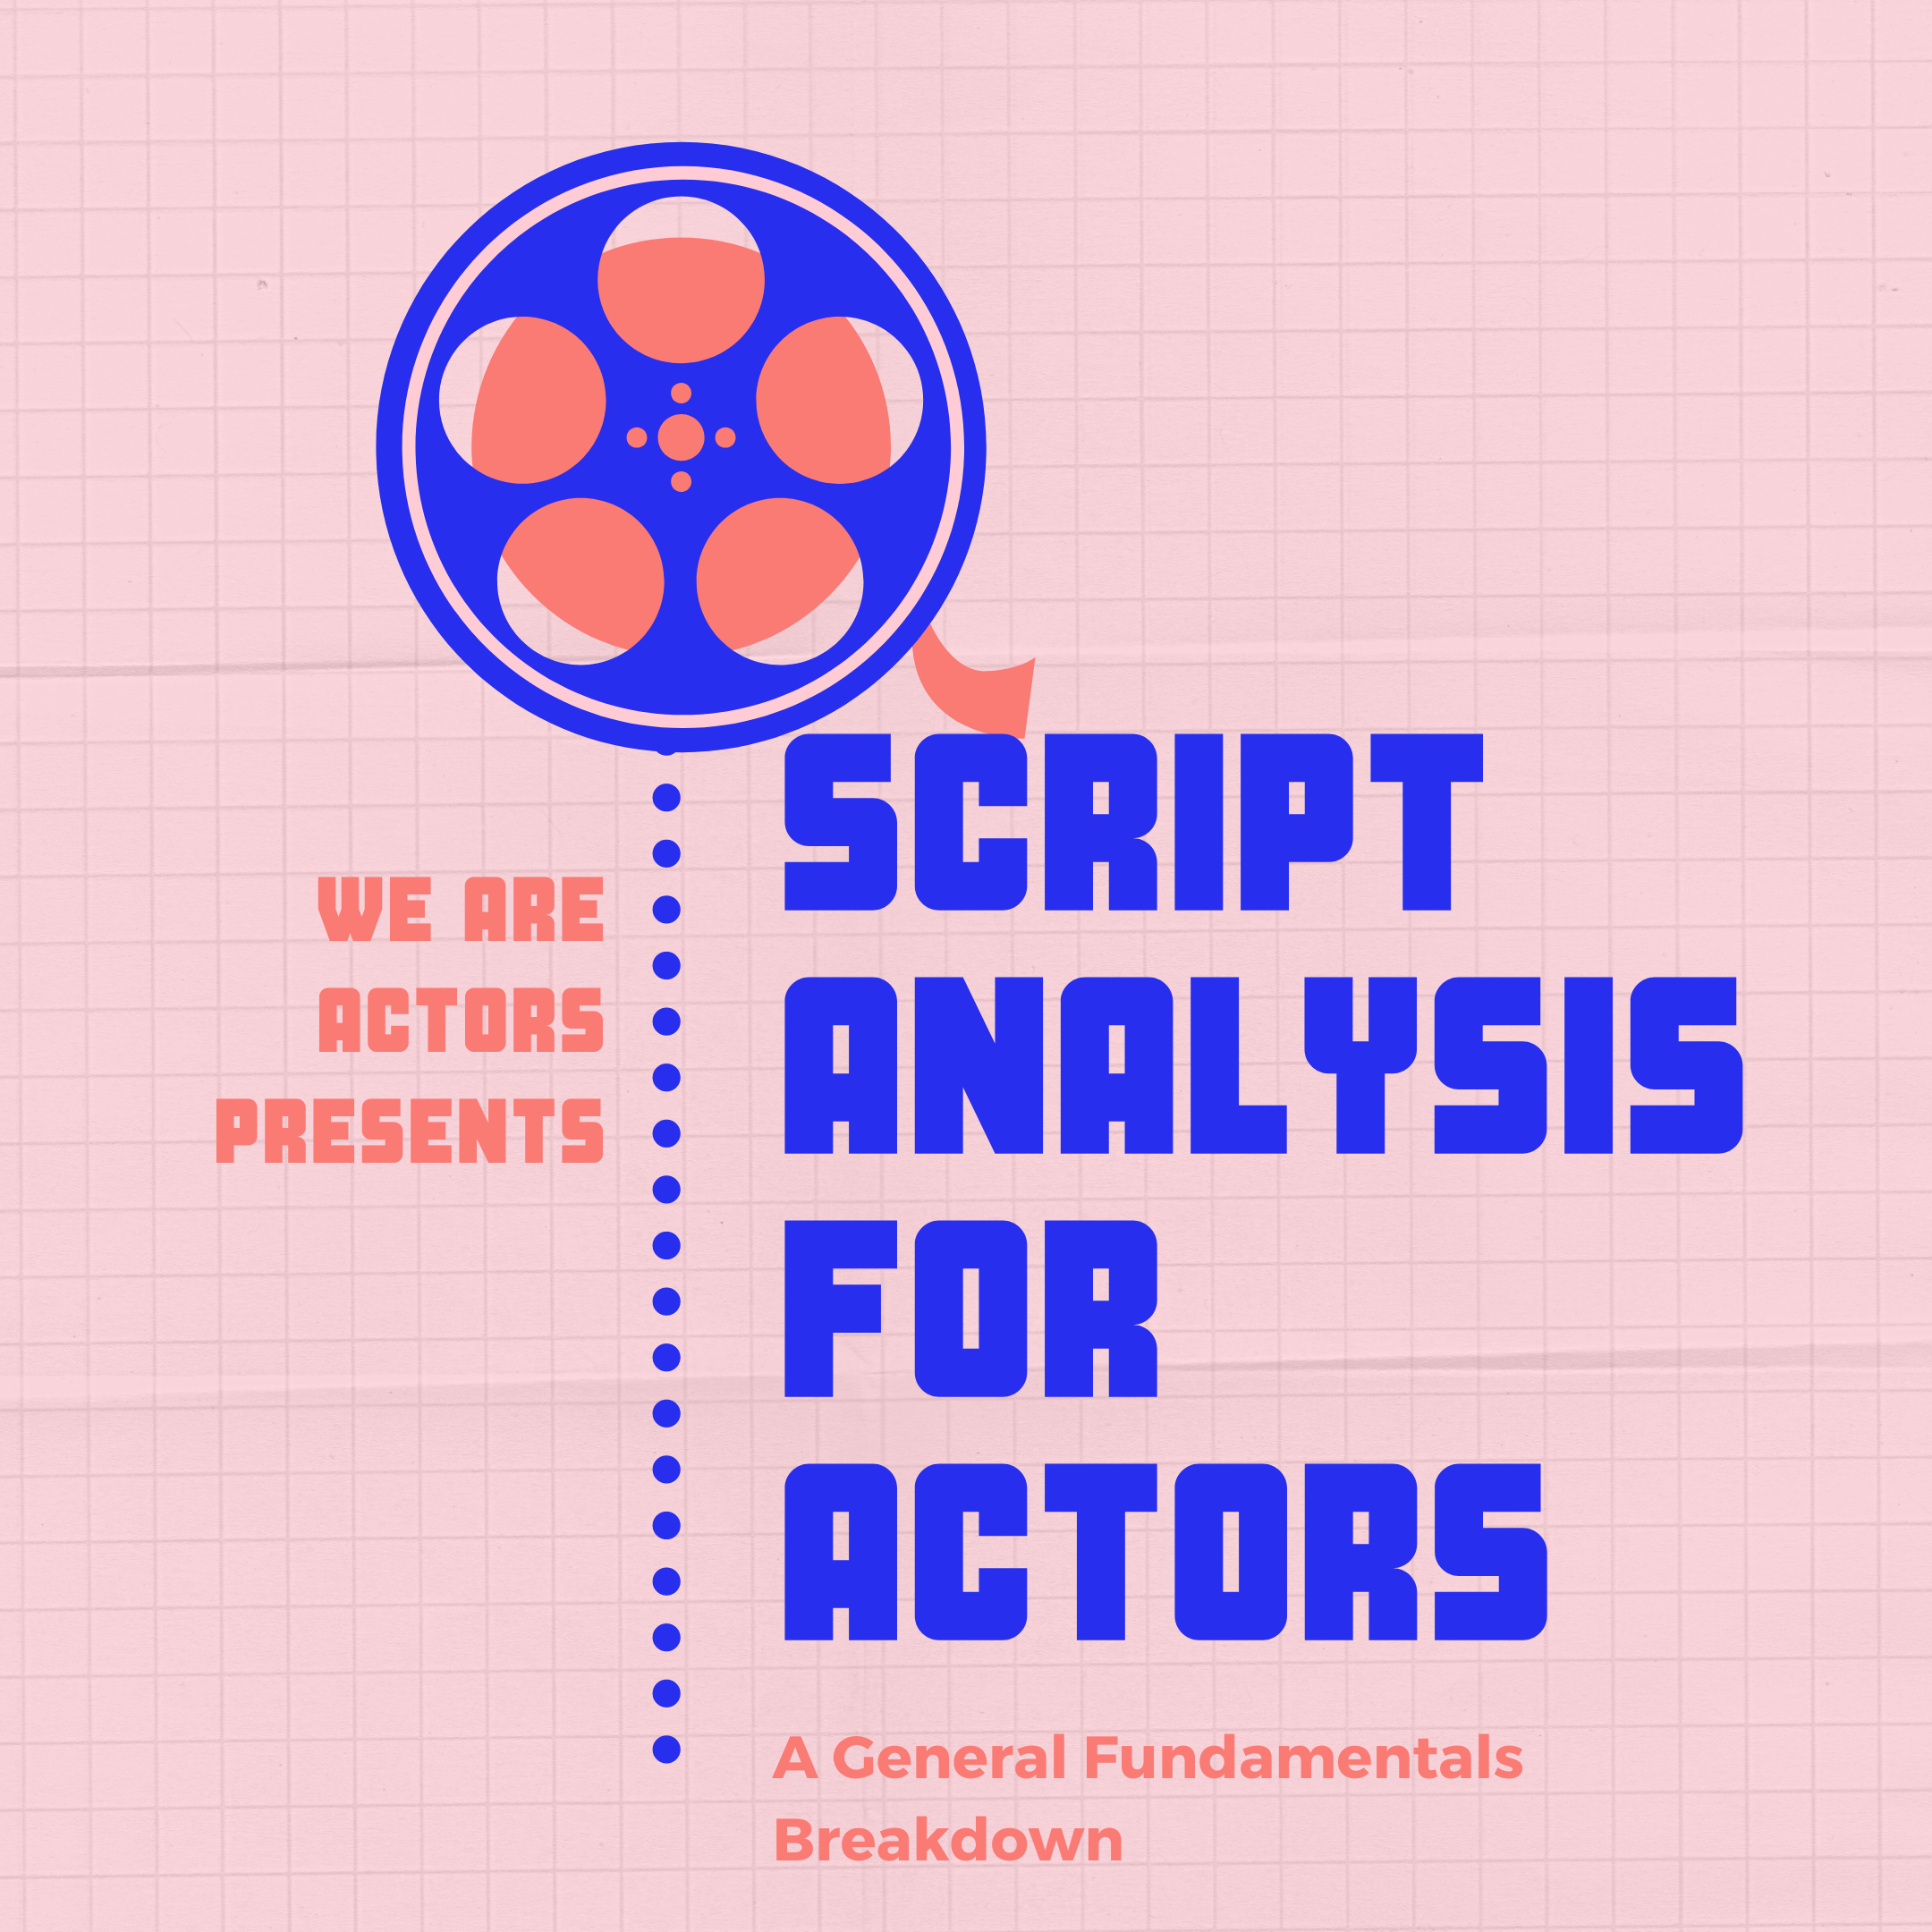 Script Analysis For actors